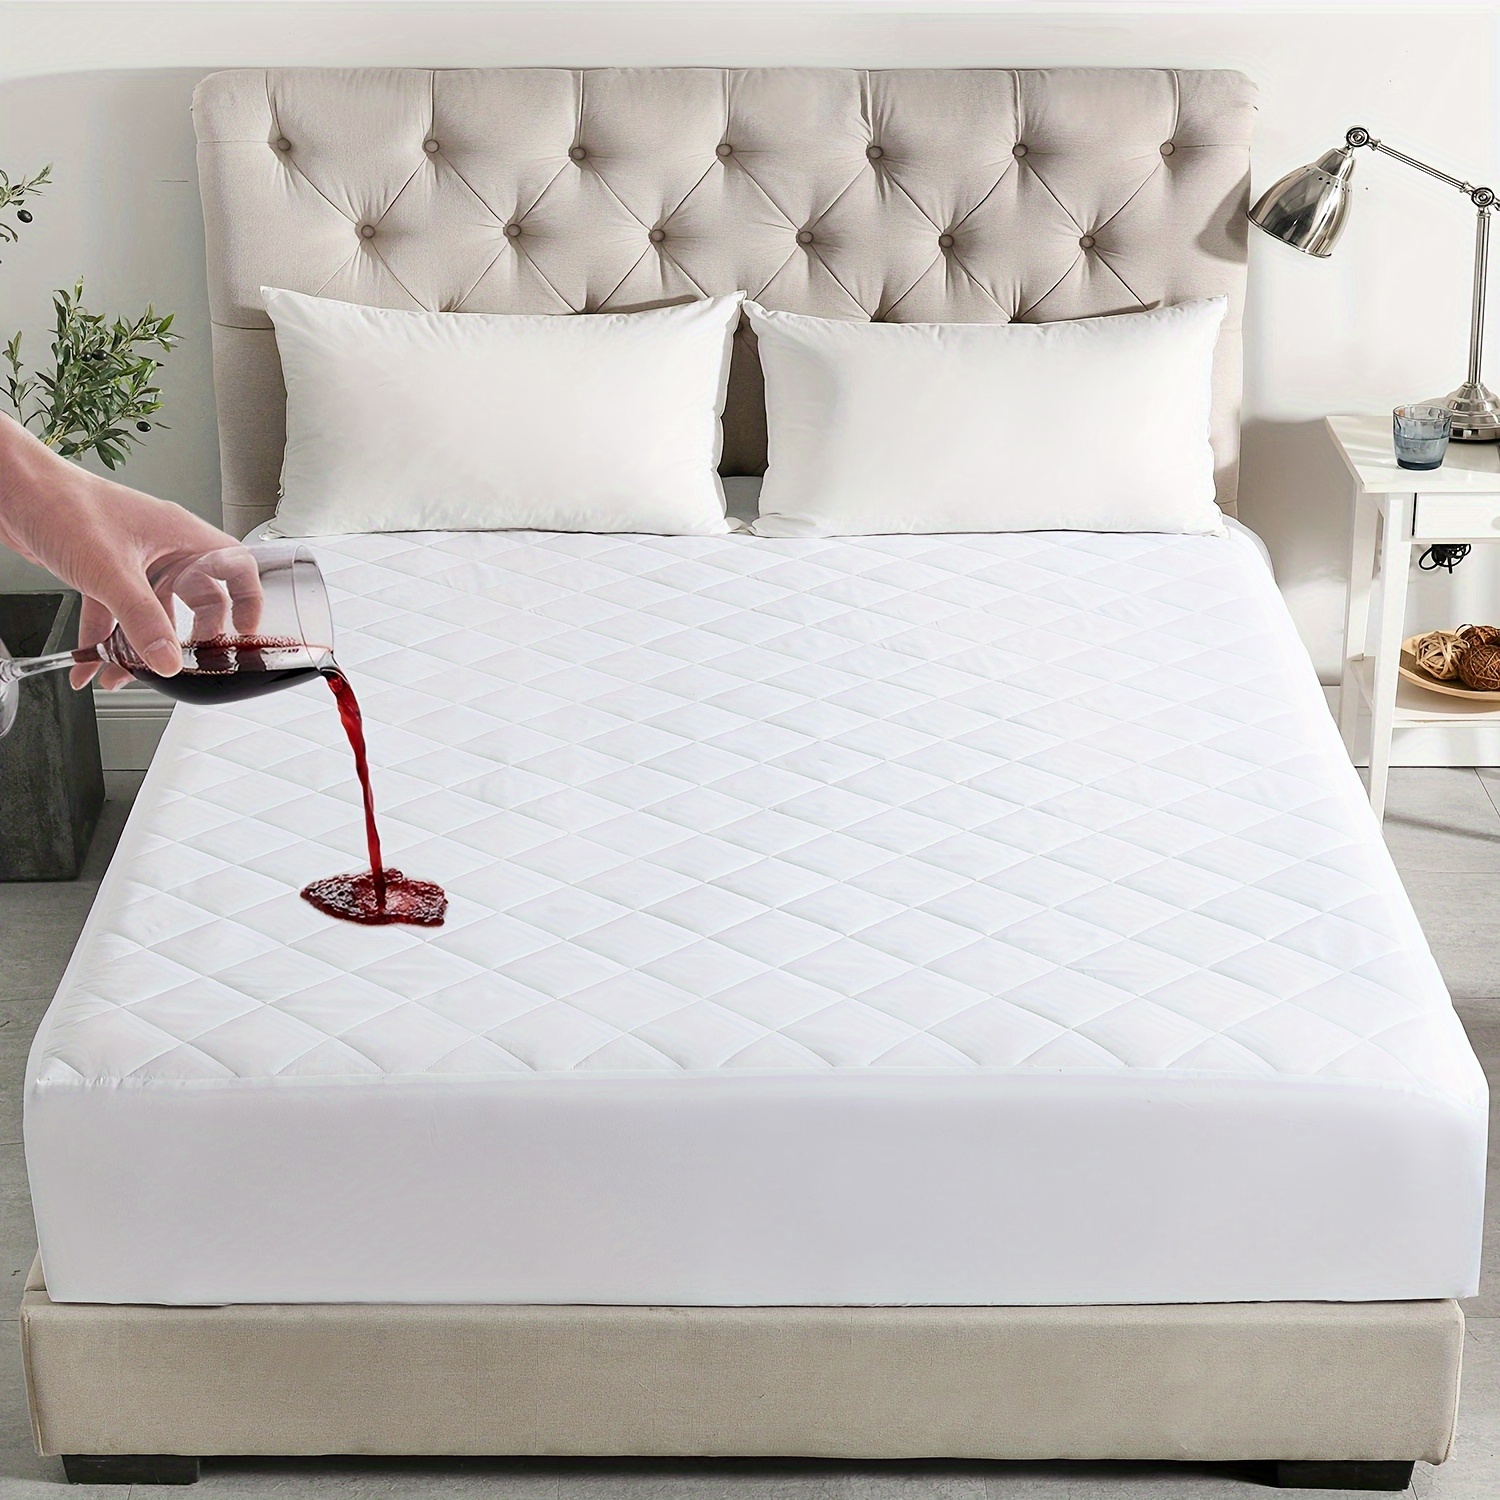 Protectores de colchón para cama desde 8,75€ en purpura home